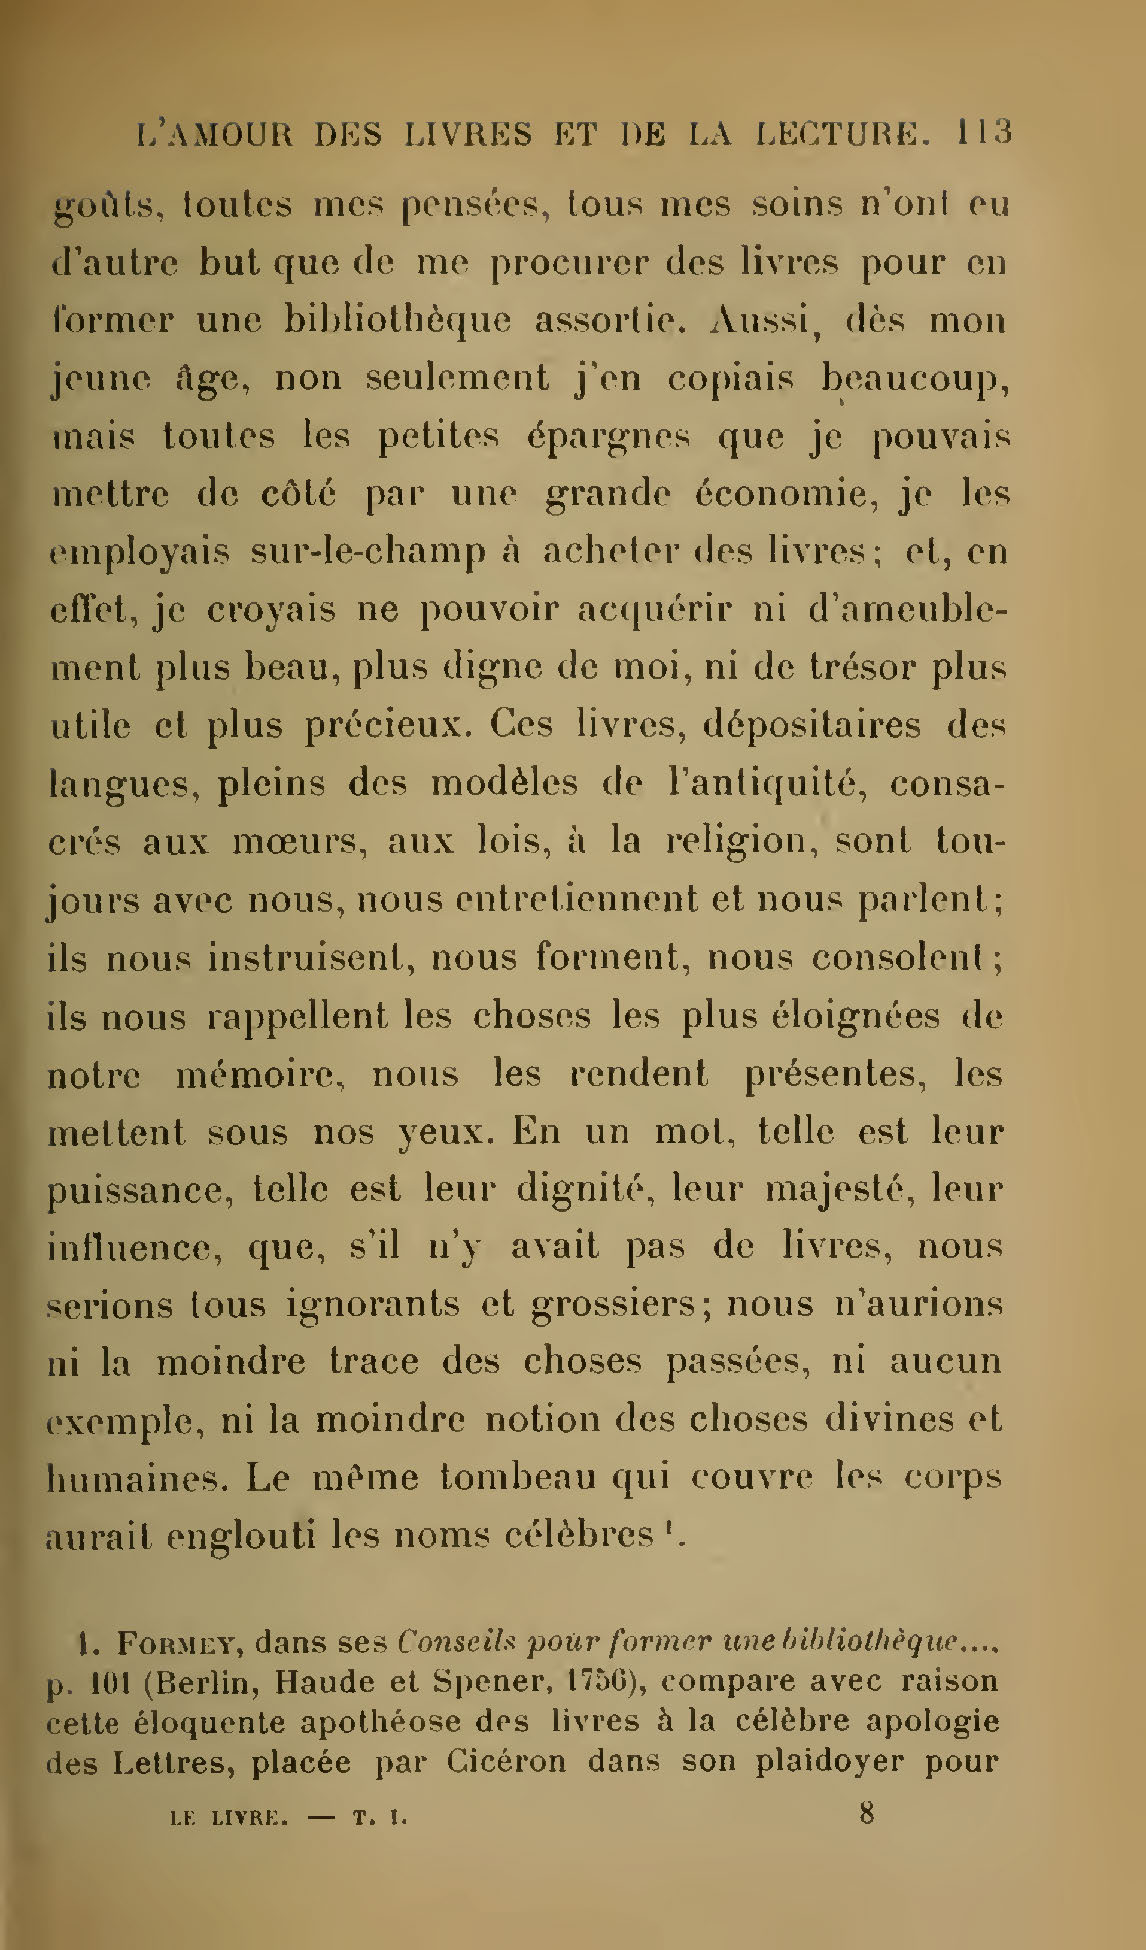 Albert Cim, Le Livre, t. I, p. 113.